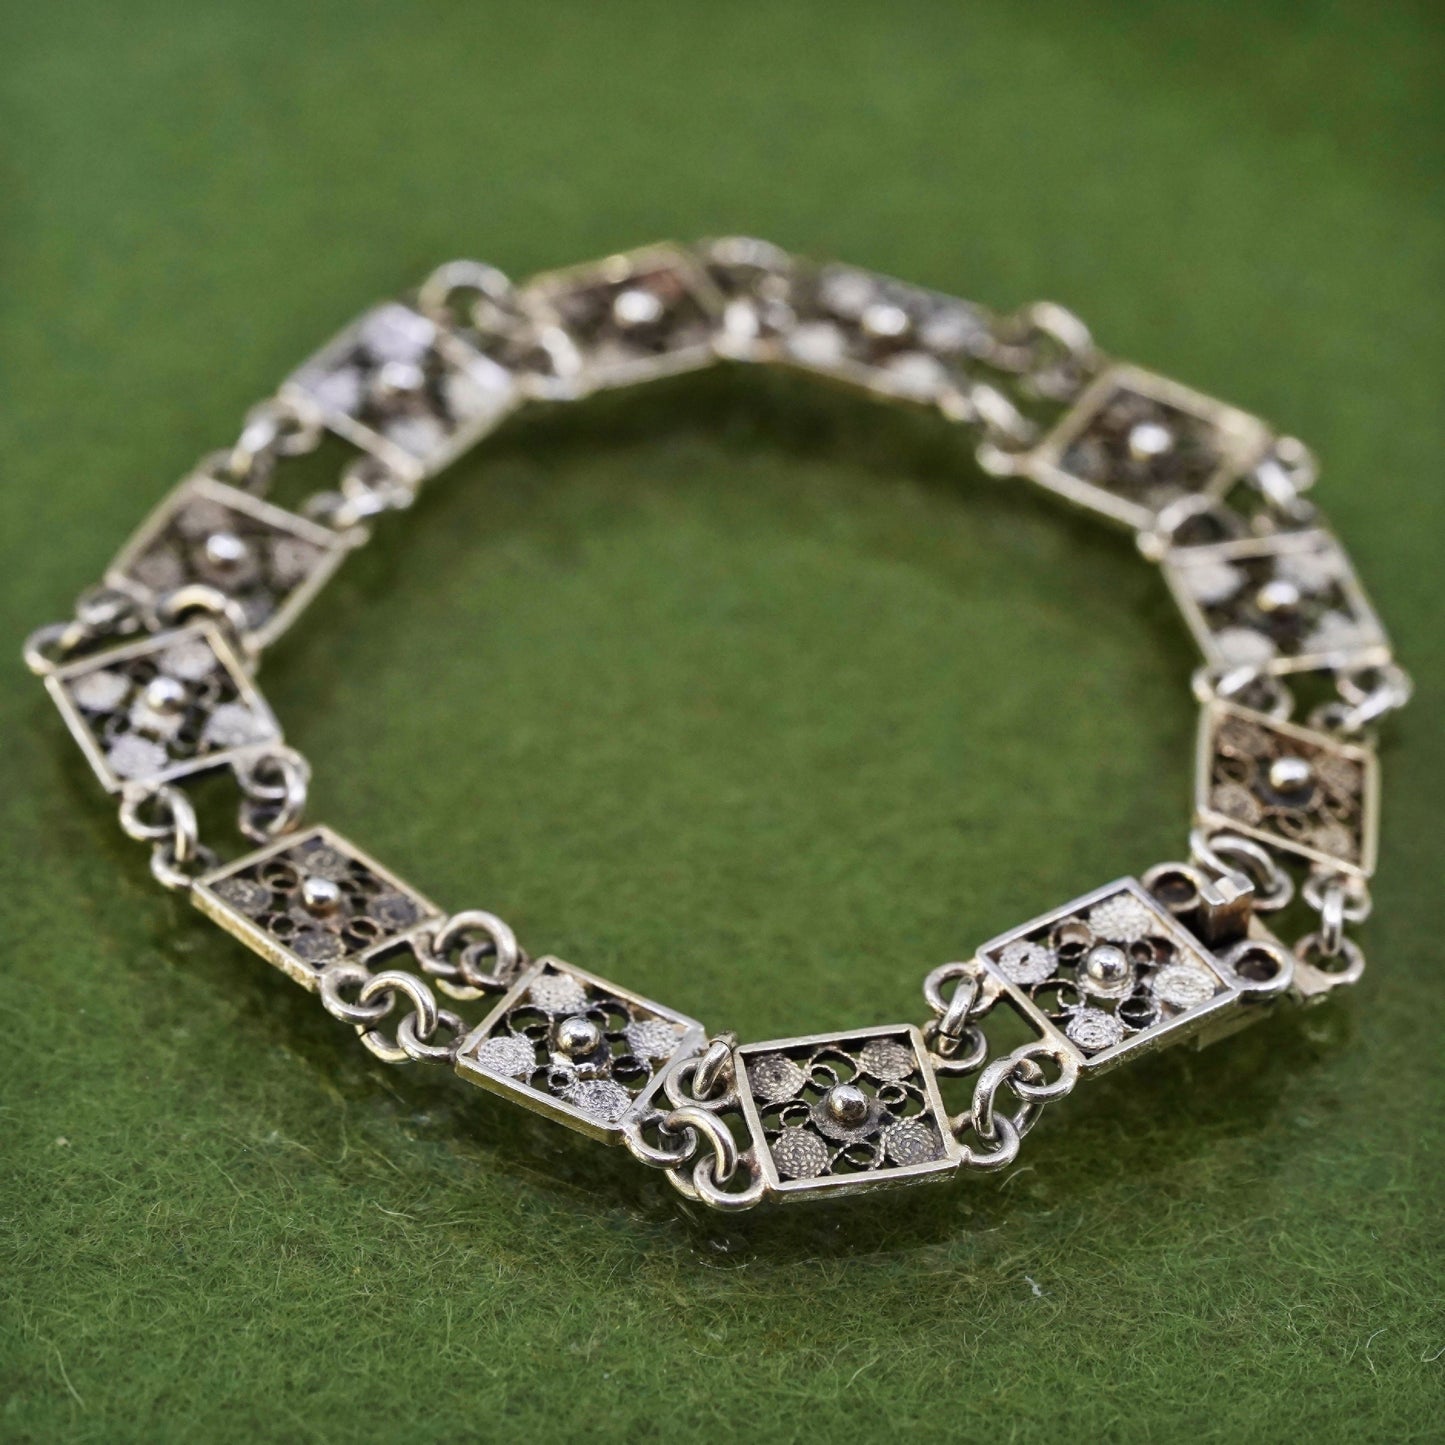 6.5", vintage Italian sterling silver bracelet, 800 filigree flower link chain